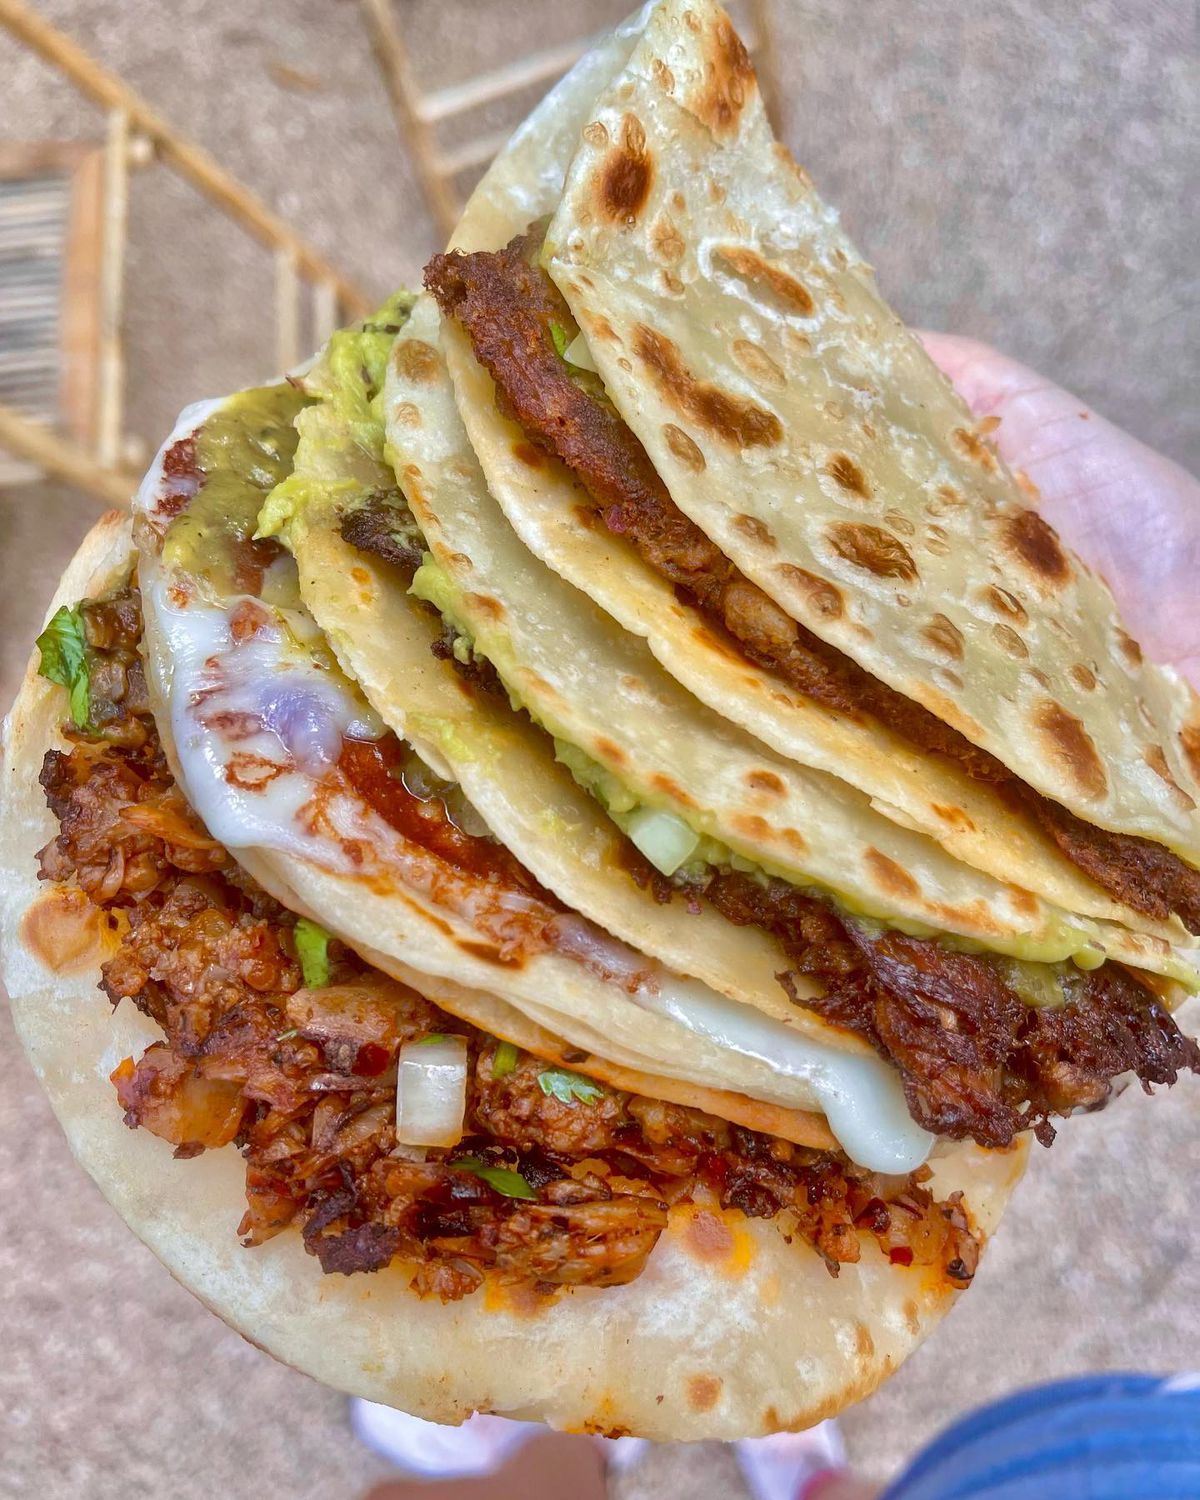 A handg holding up four tacos.